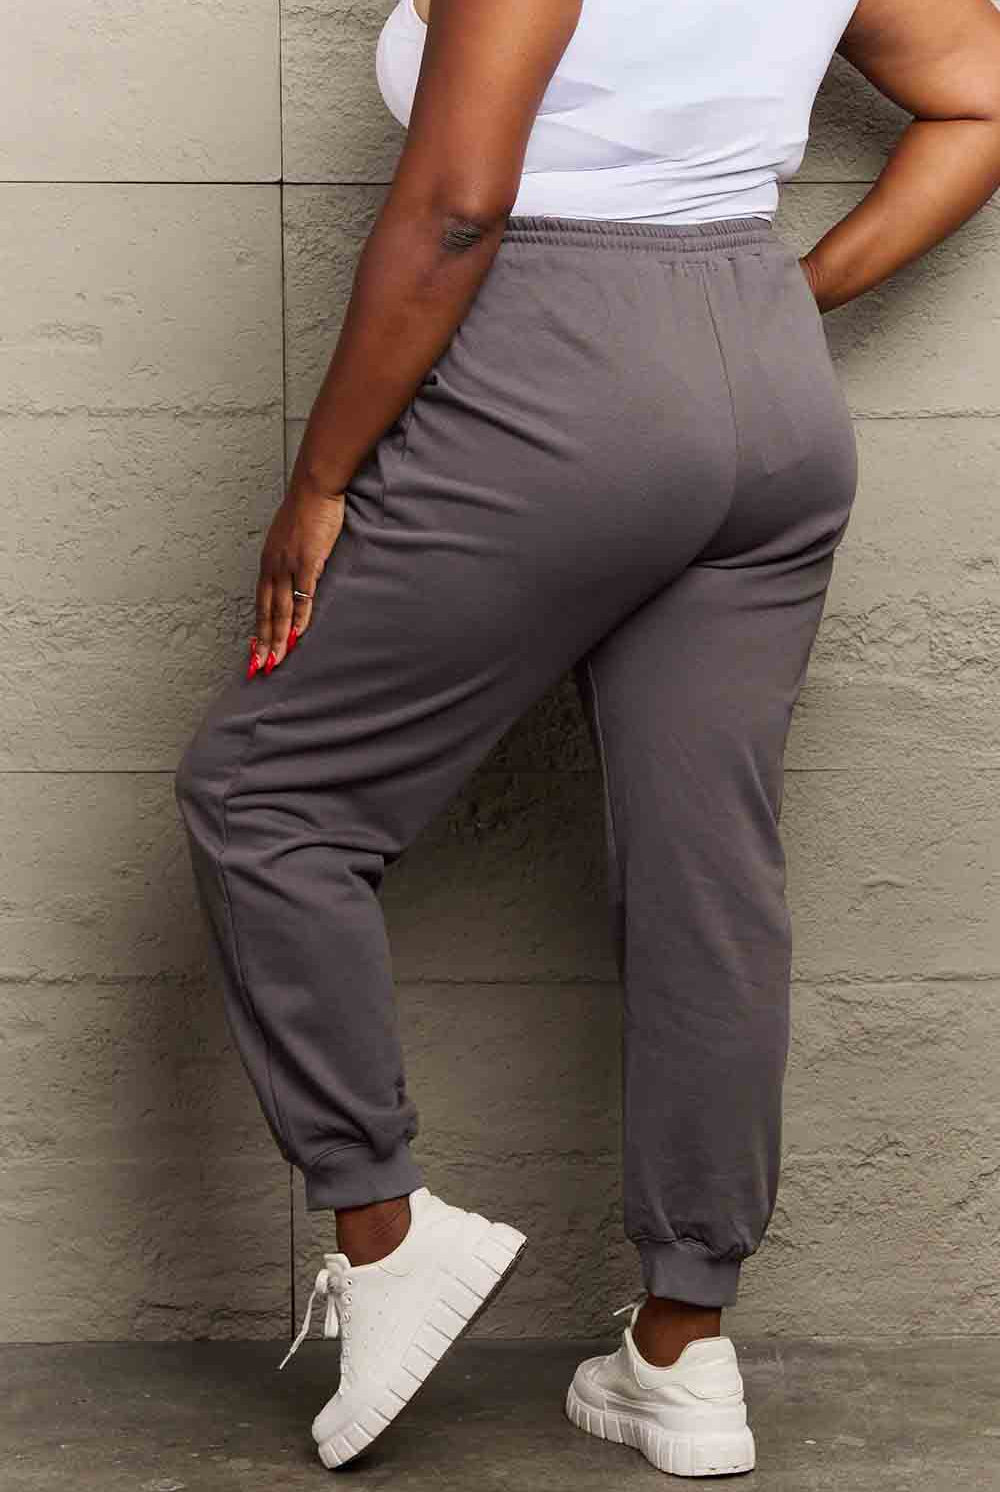 Dim Gray Simply Love Full Size SKELETON Graphic Sweatpants Sweatpants